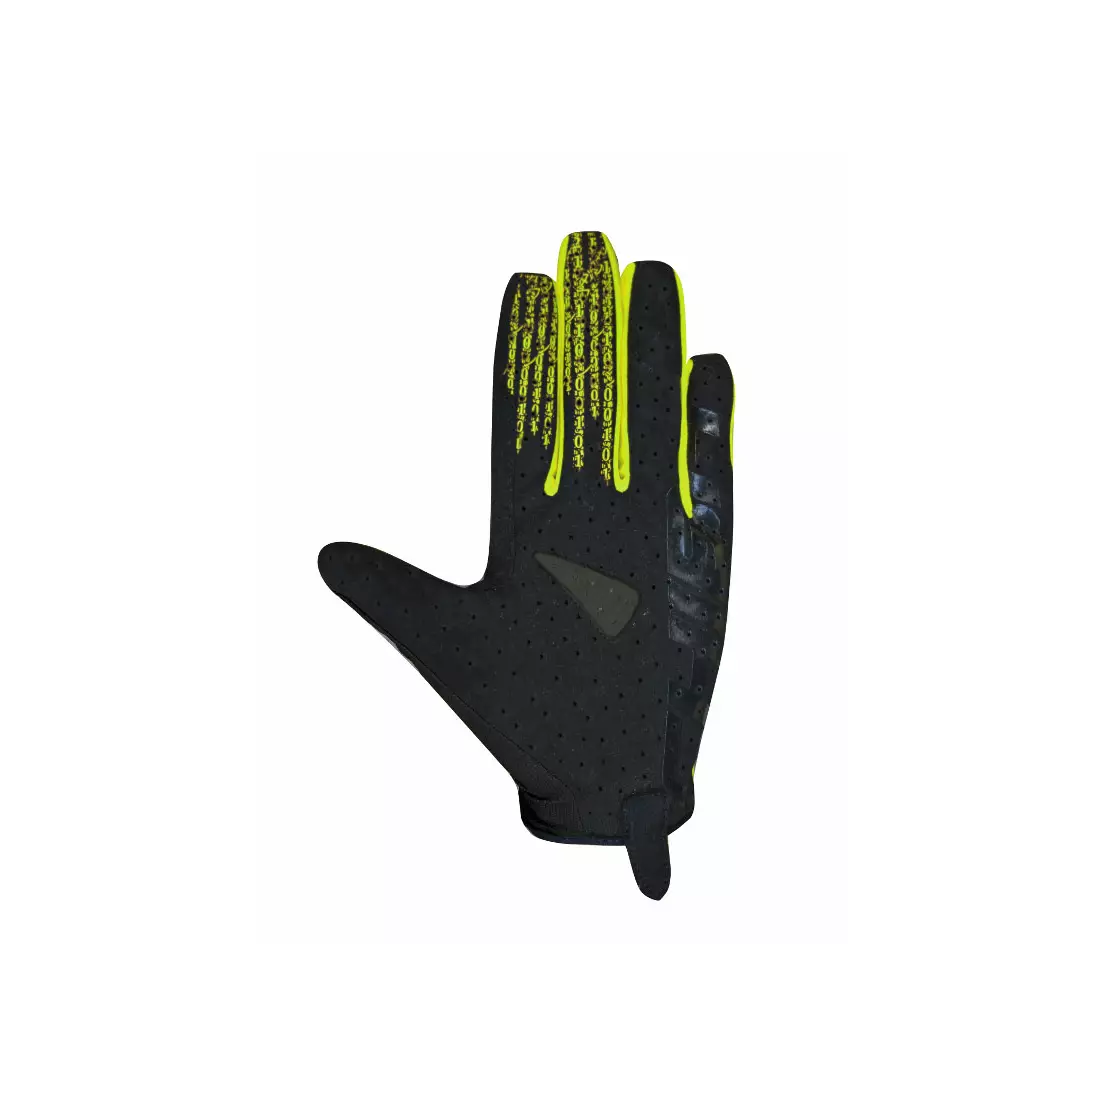 CHIBA TITAN summer long finger cycling gloves, black fluor yellow 30786